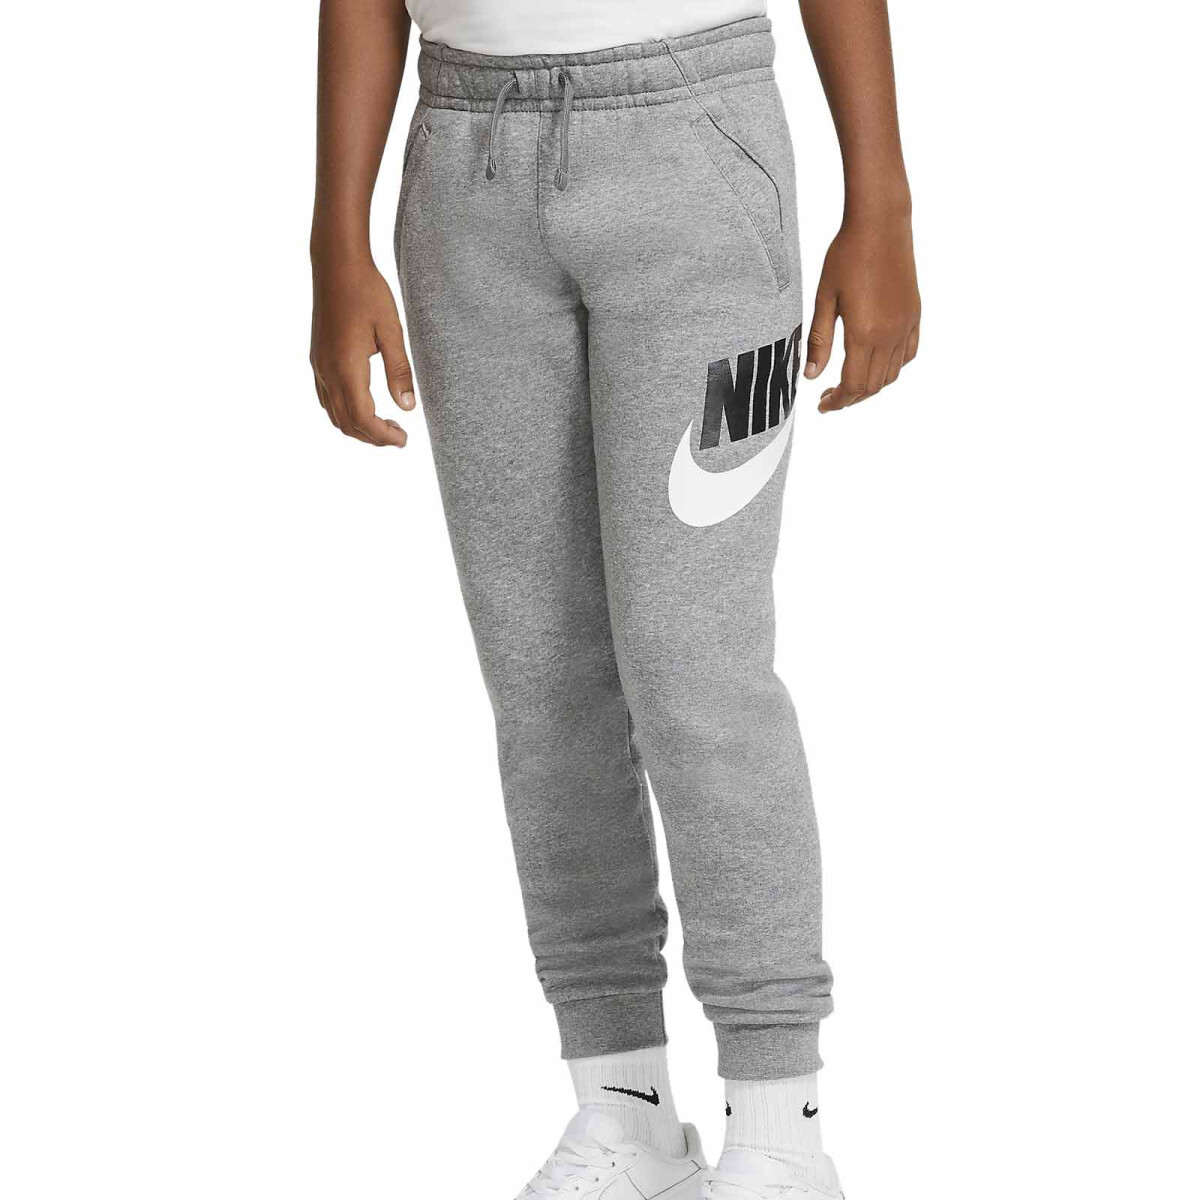 Pantalon Nike Moda Niño Club + Hbr Carbon Heather/Smoke Grey - S/C 